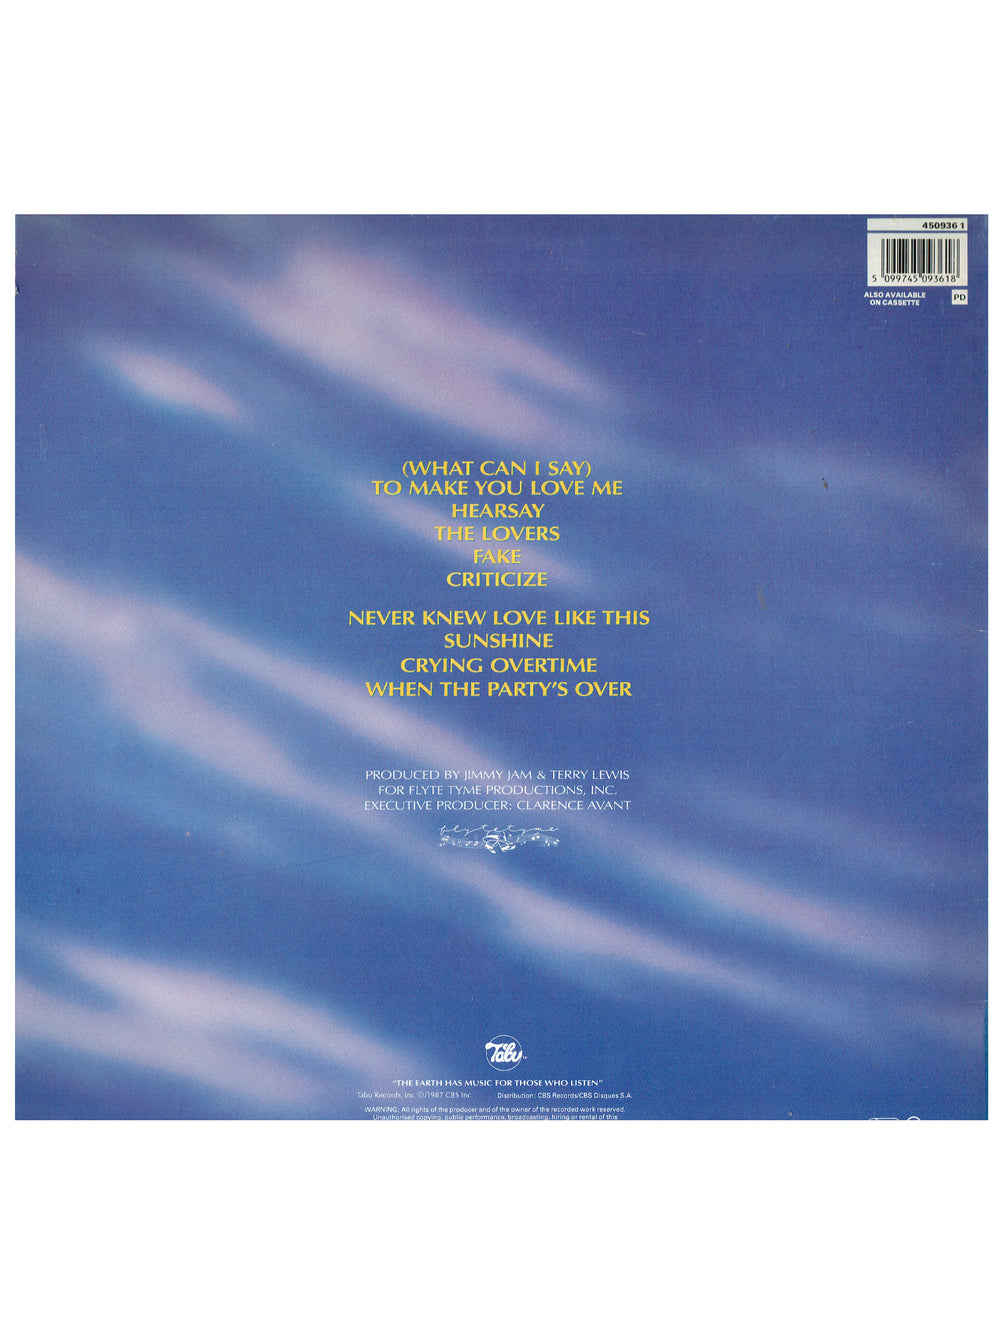 Prince – Alexander O'Neal Hearsay Vinyl Album 1987 UK Release Jam & Lewis Prince